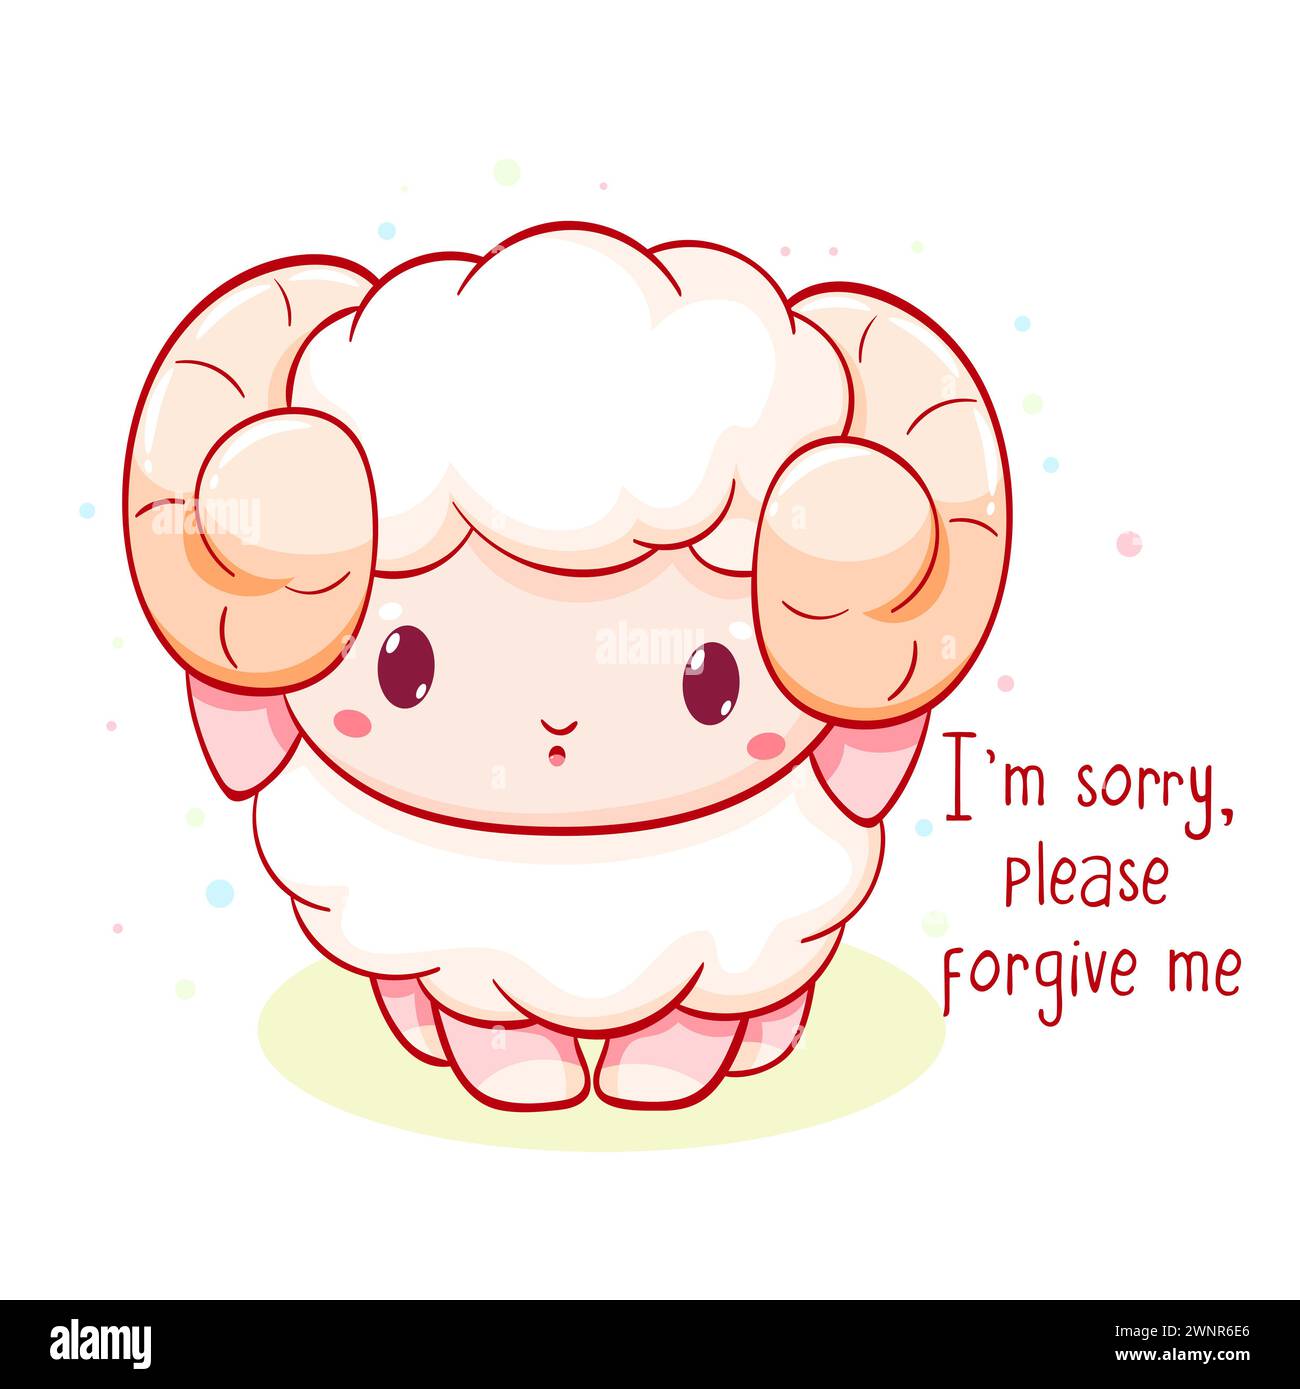 Apologize card. Sad little sheep and Inscription I'm sorry, please forgive me. Cute baby lamb apologize. Vector illustration EPS8 Stock Photo